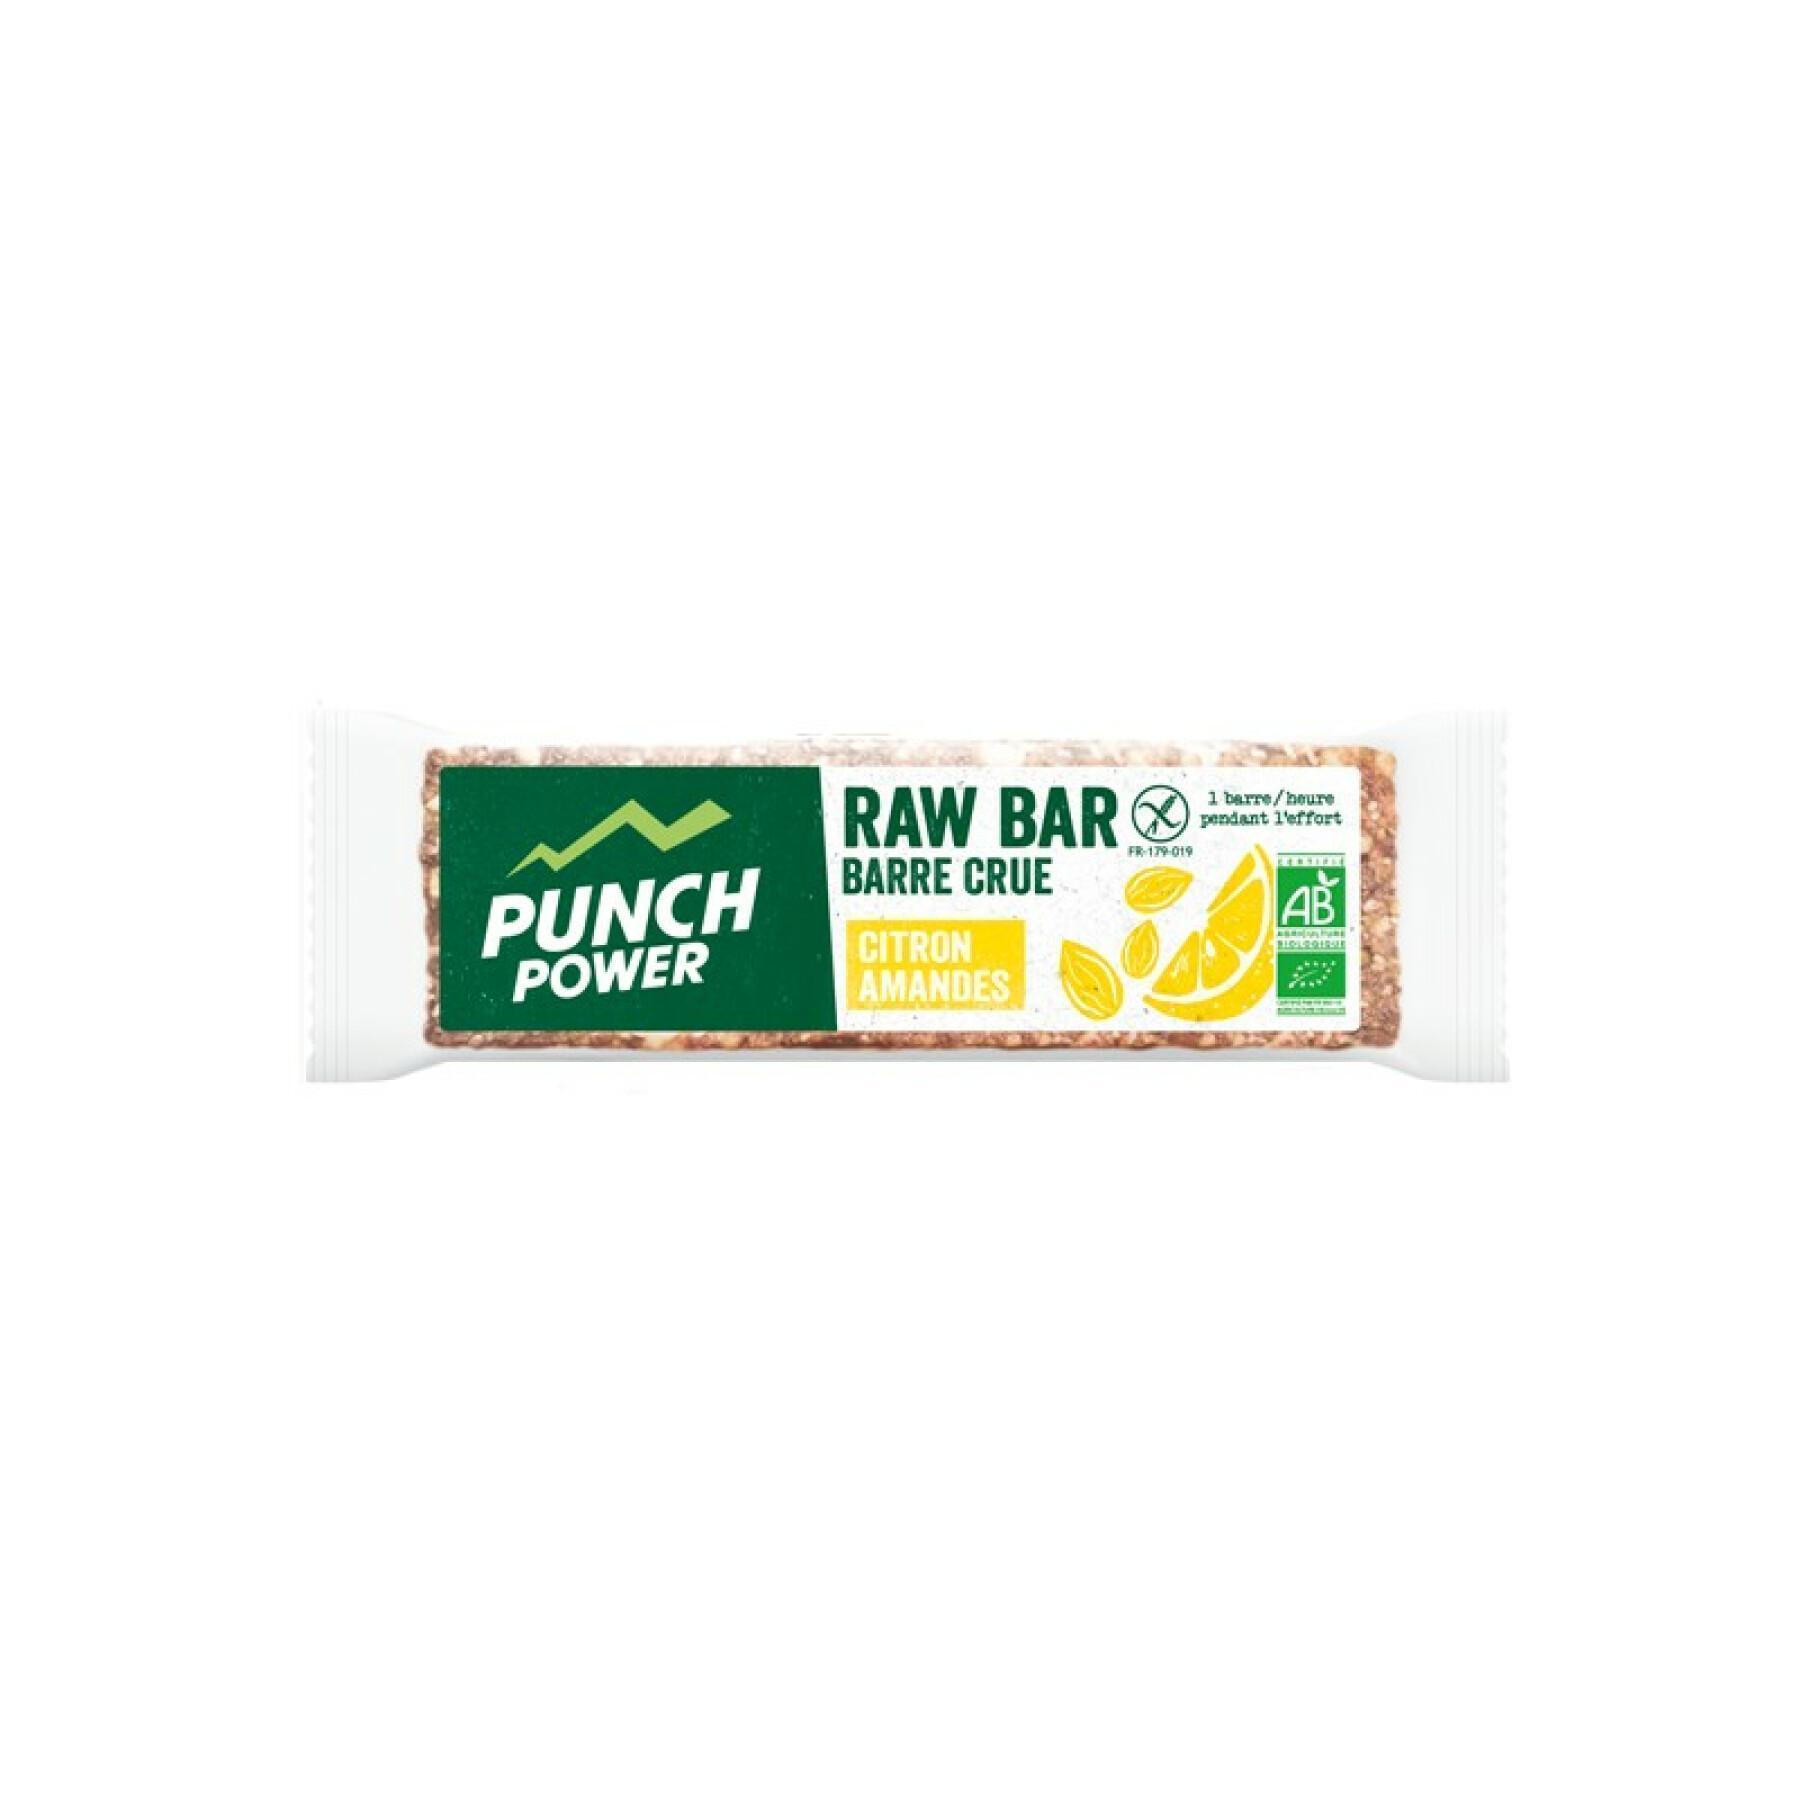 Mostrar 20 barras de energia Punch Power Rawbar Citron amande